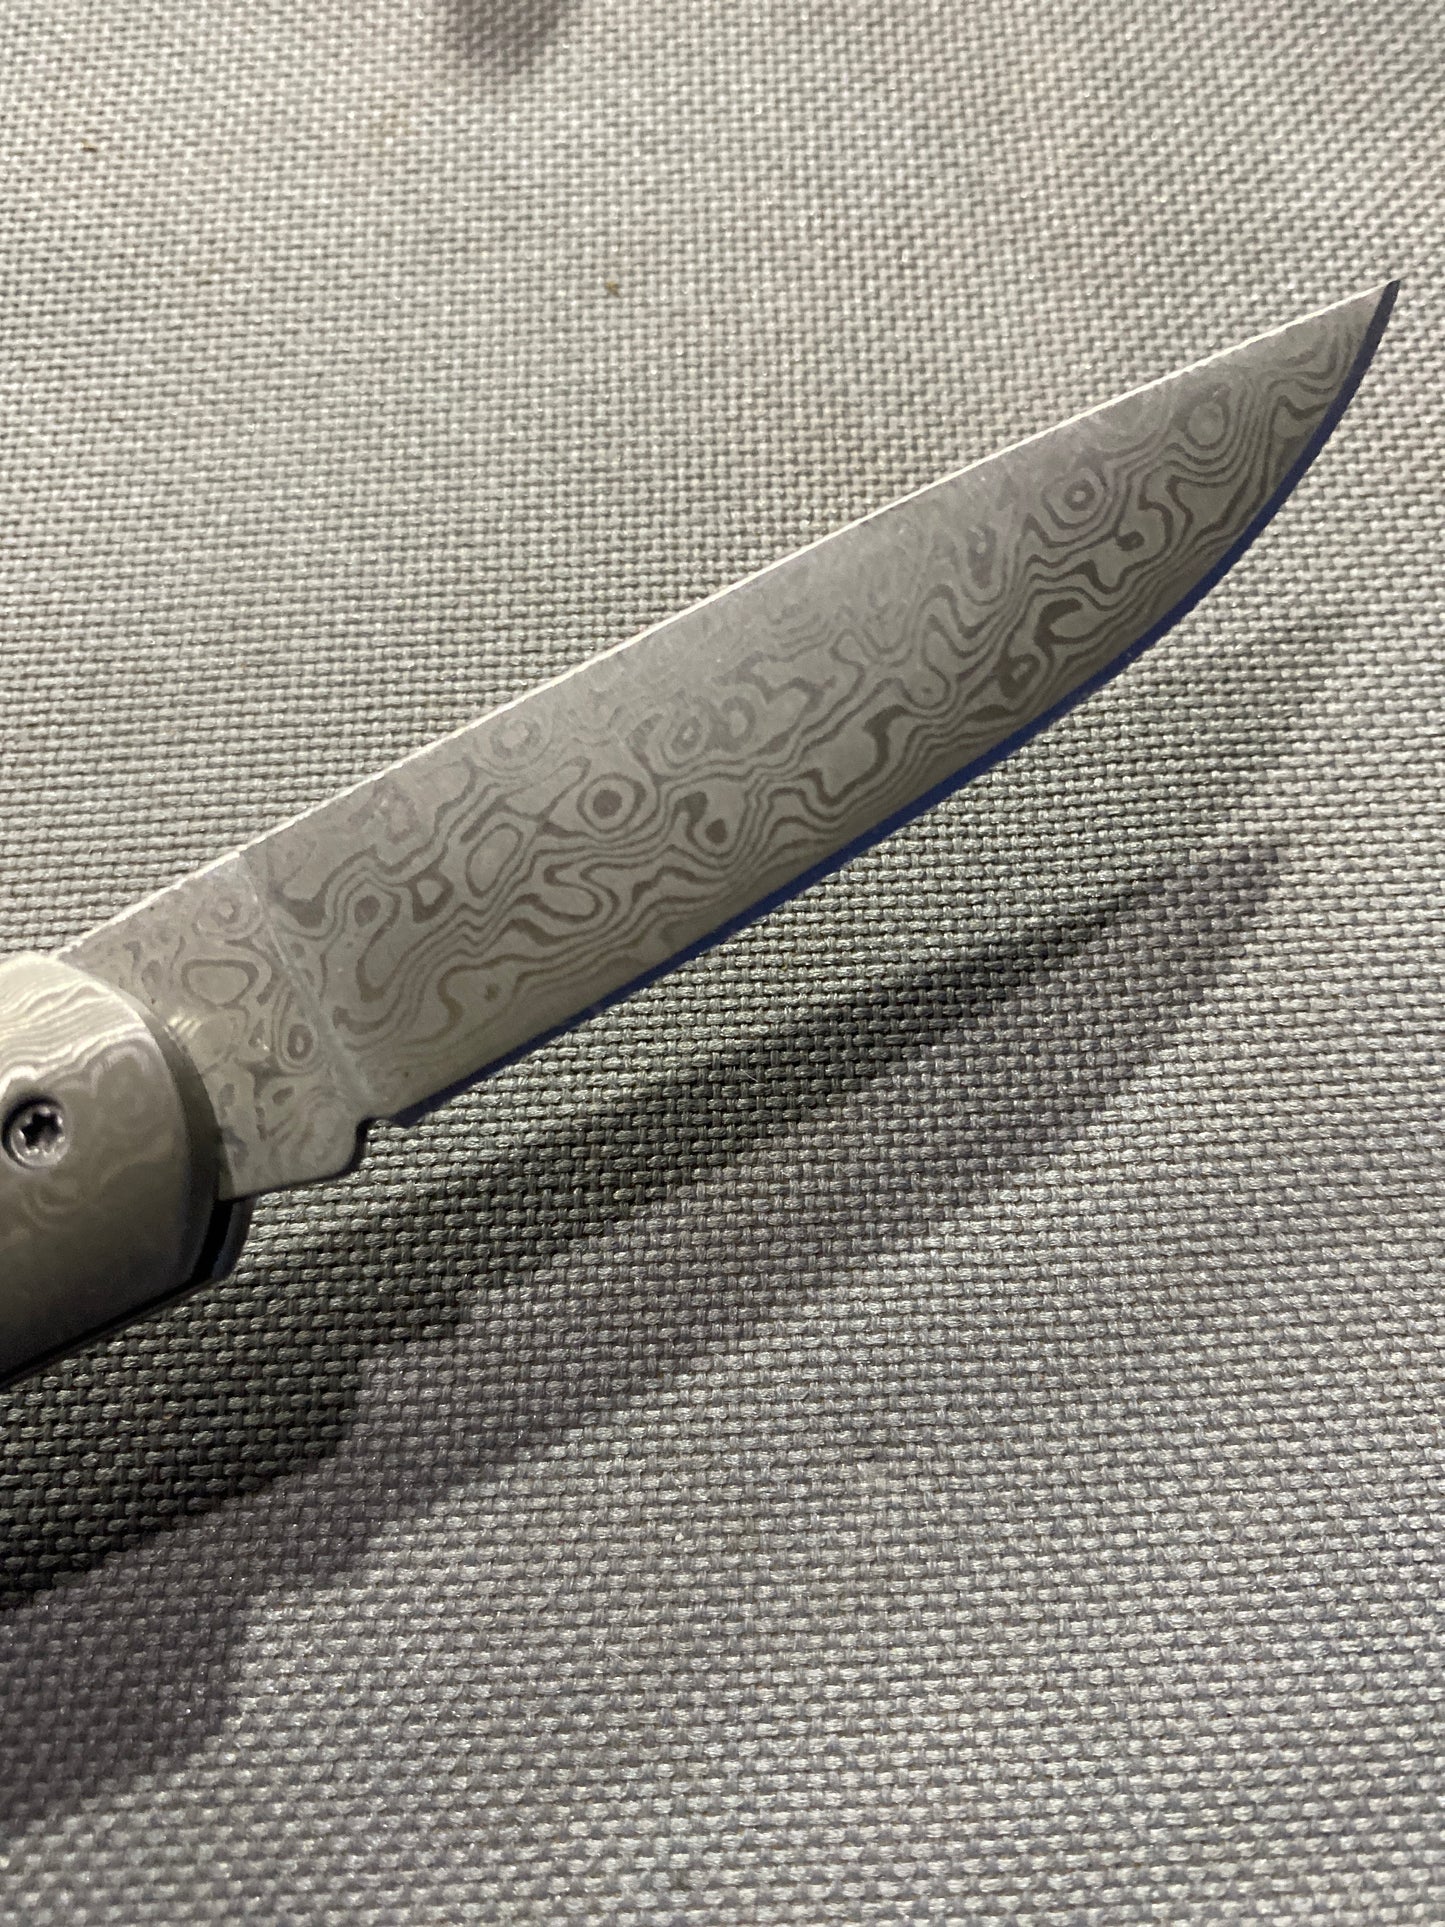 FD-103 BURLWOOD folding knife / Ball Bearing Steel Blade